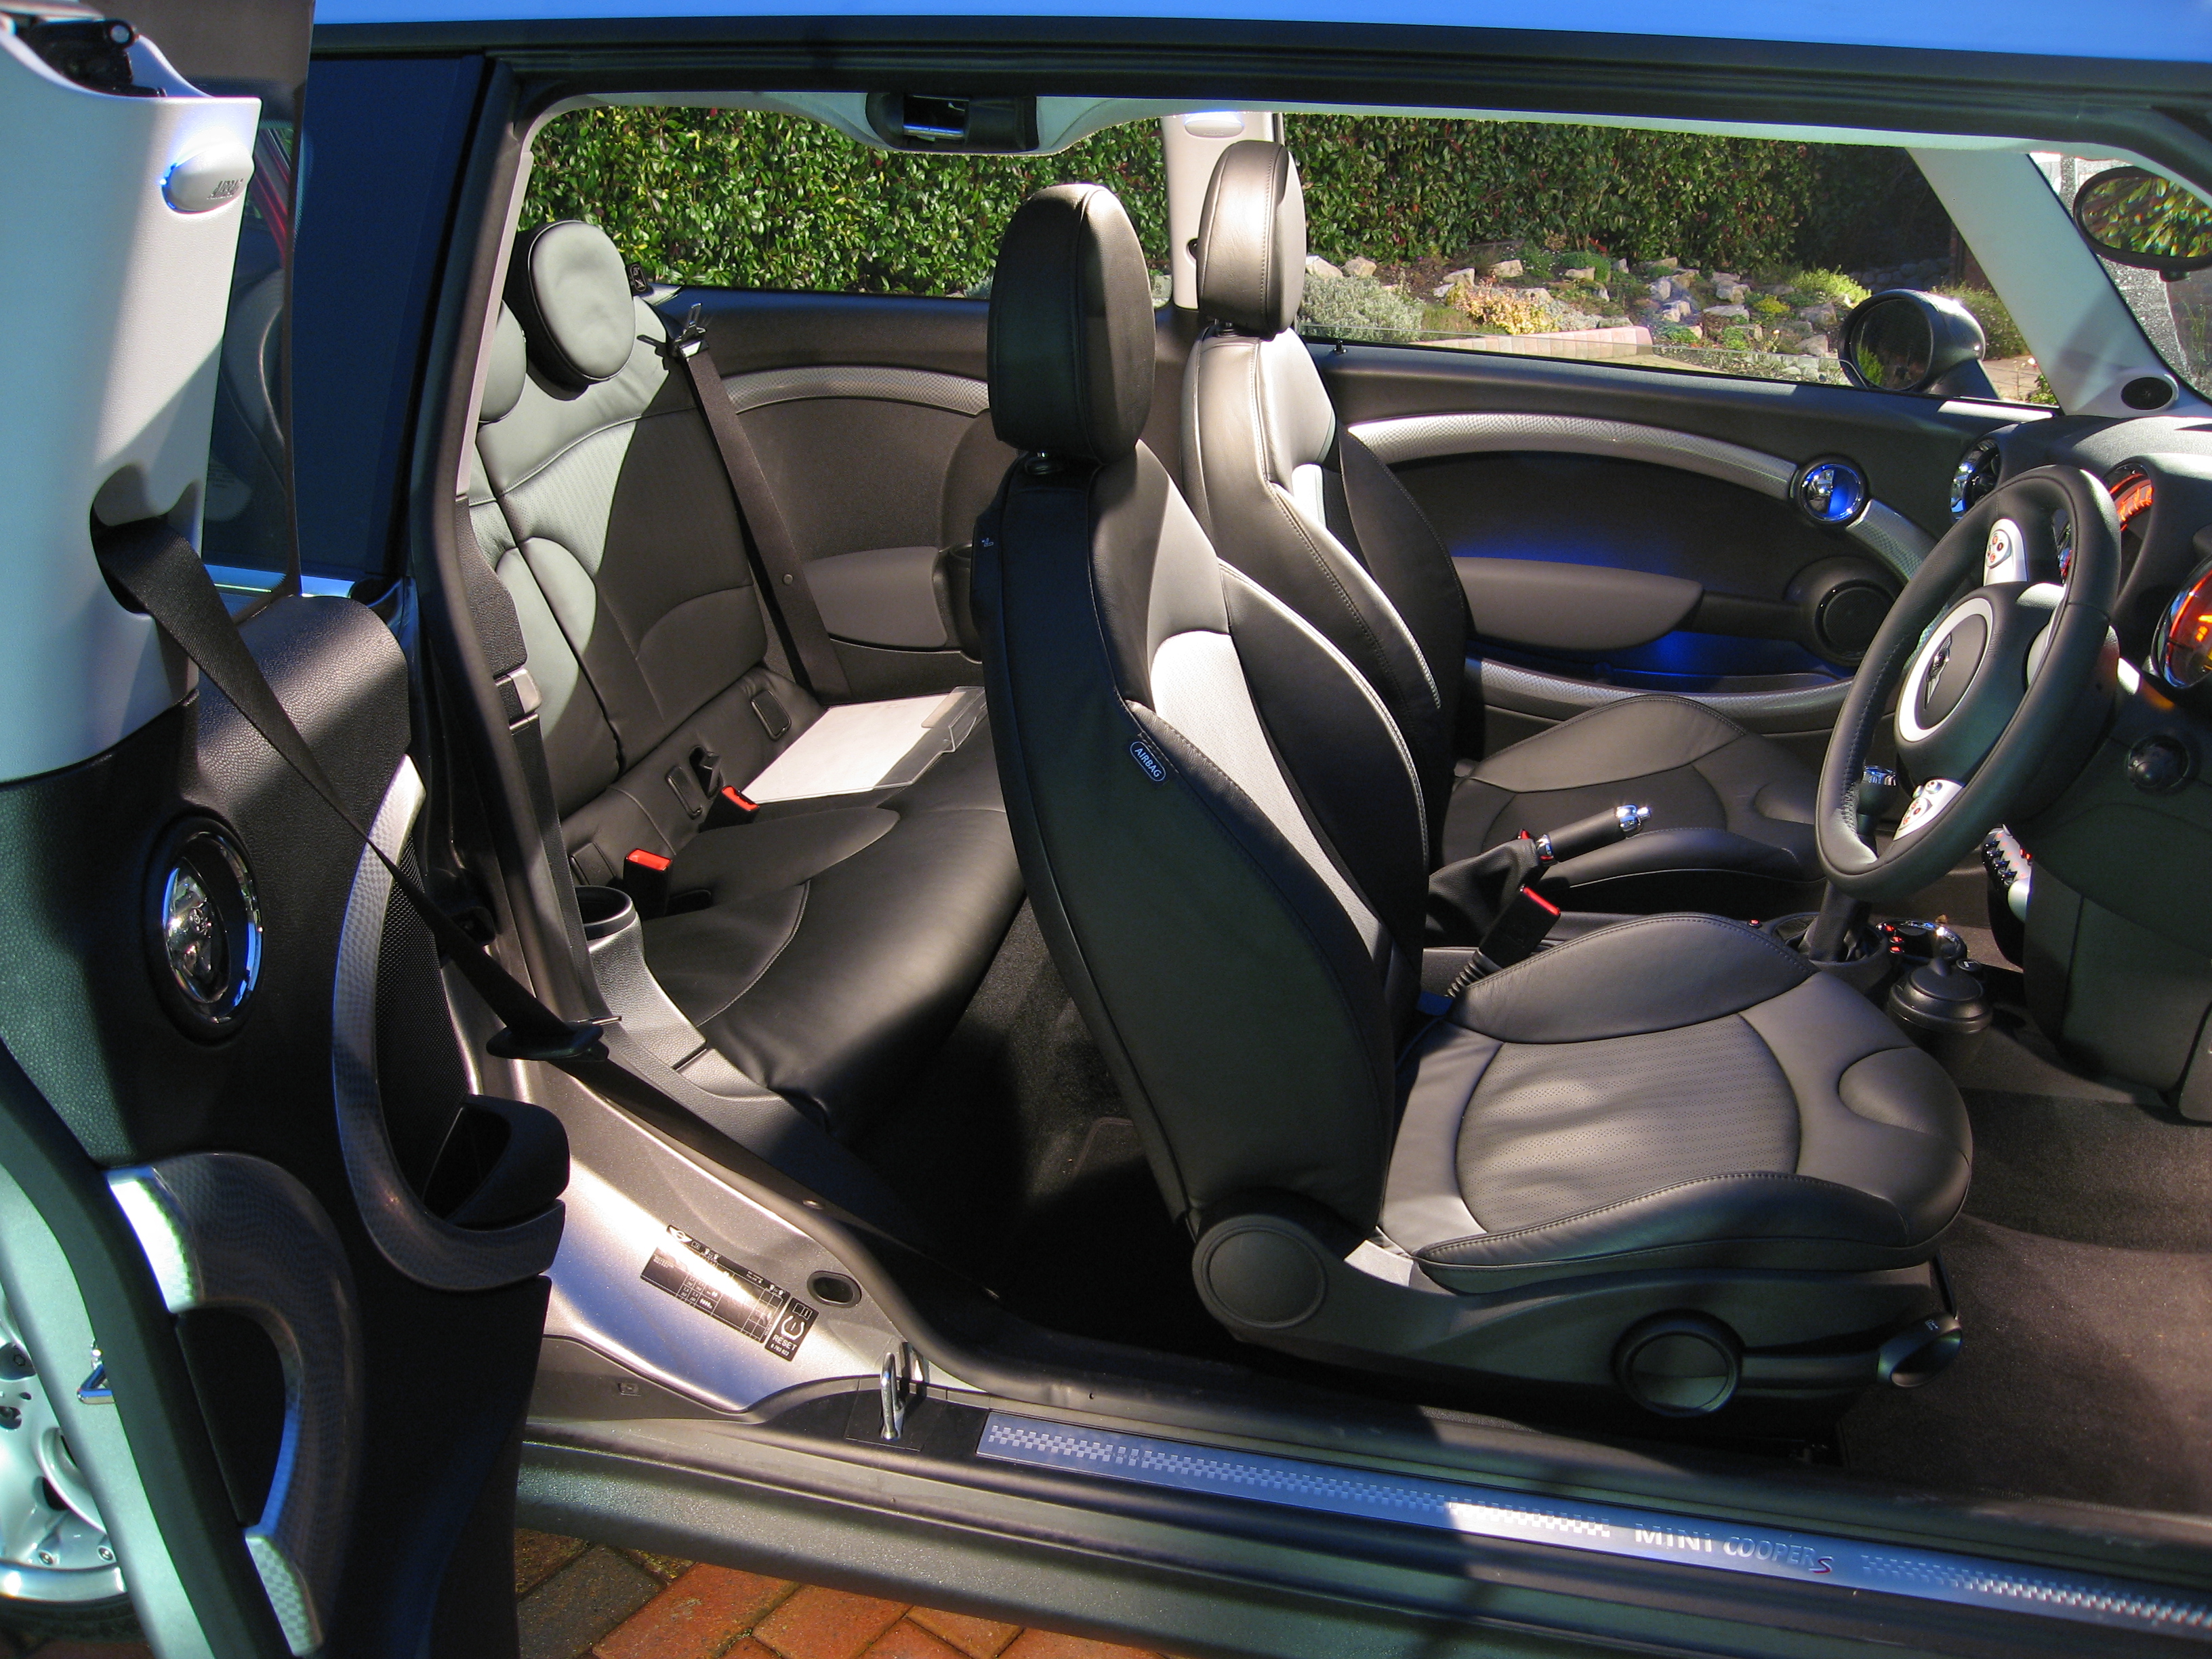 2008 MINI Cooper S Clubman - Interior | Flickr - Photo Sharing!